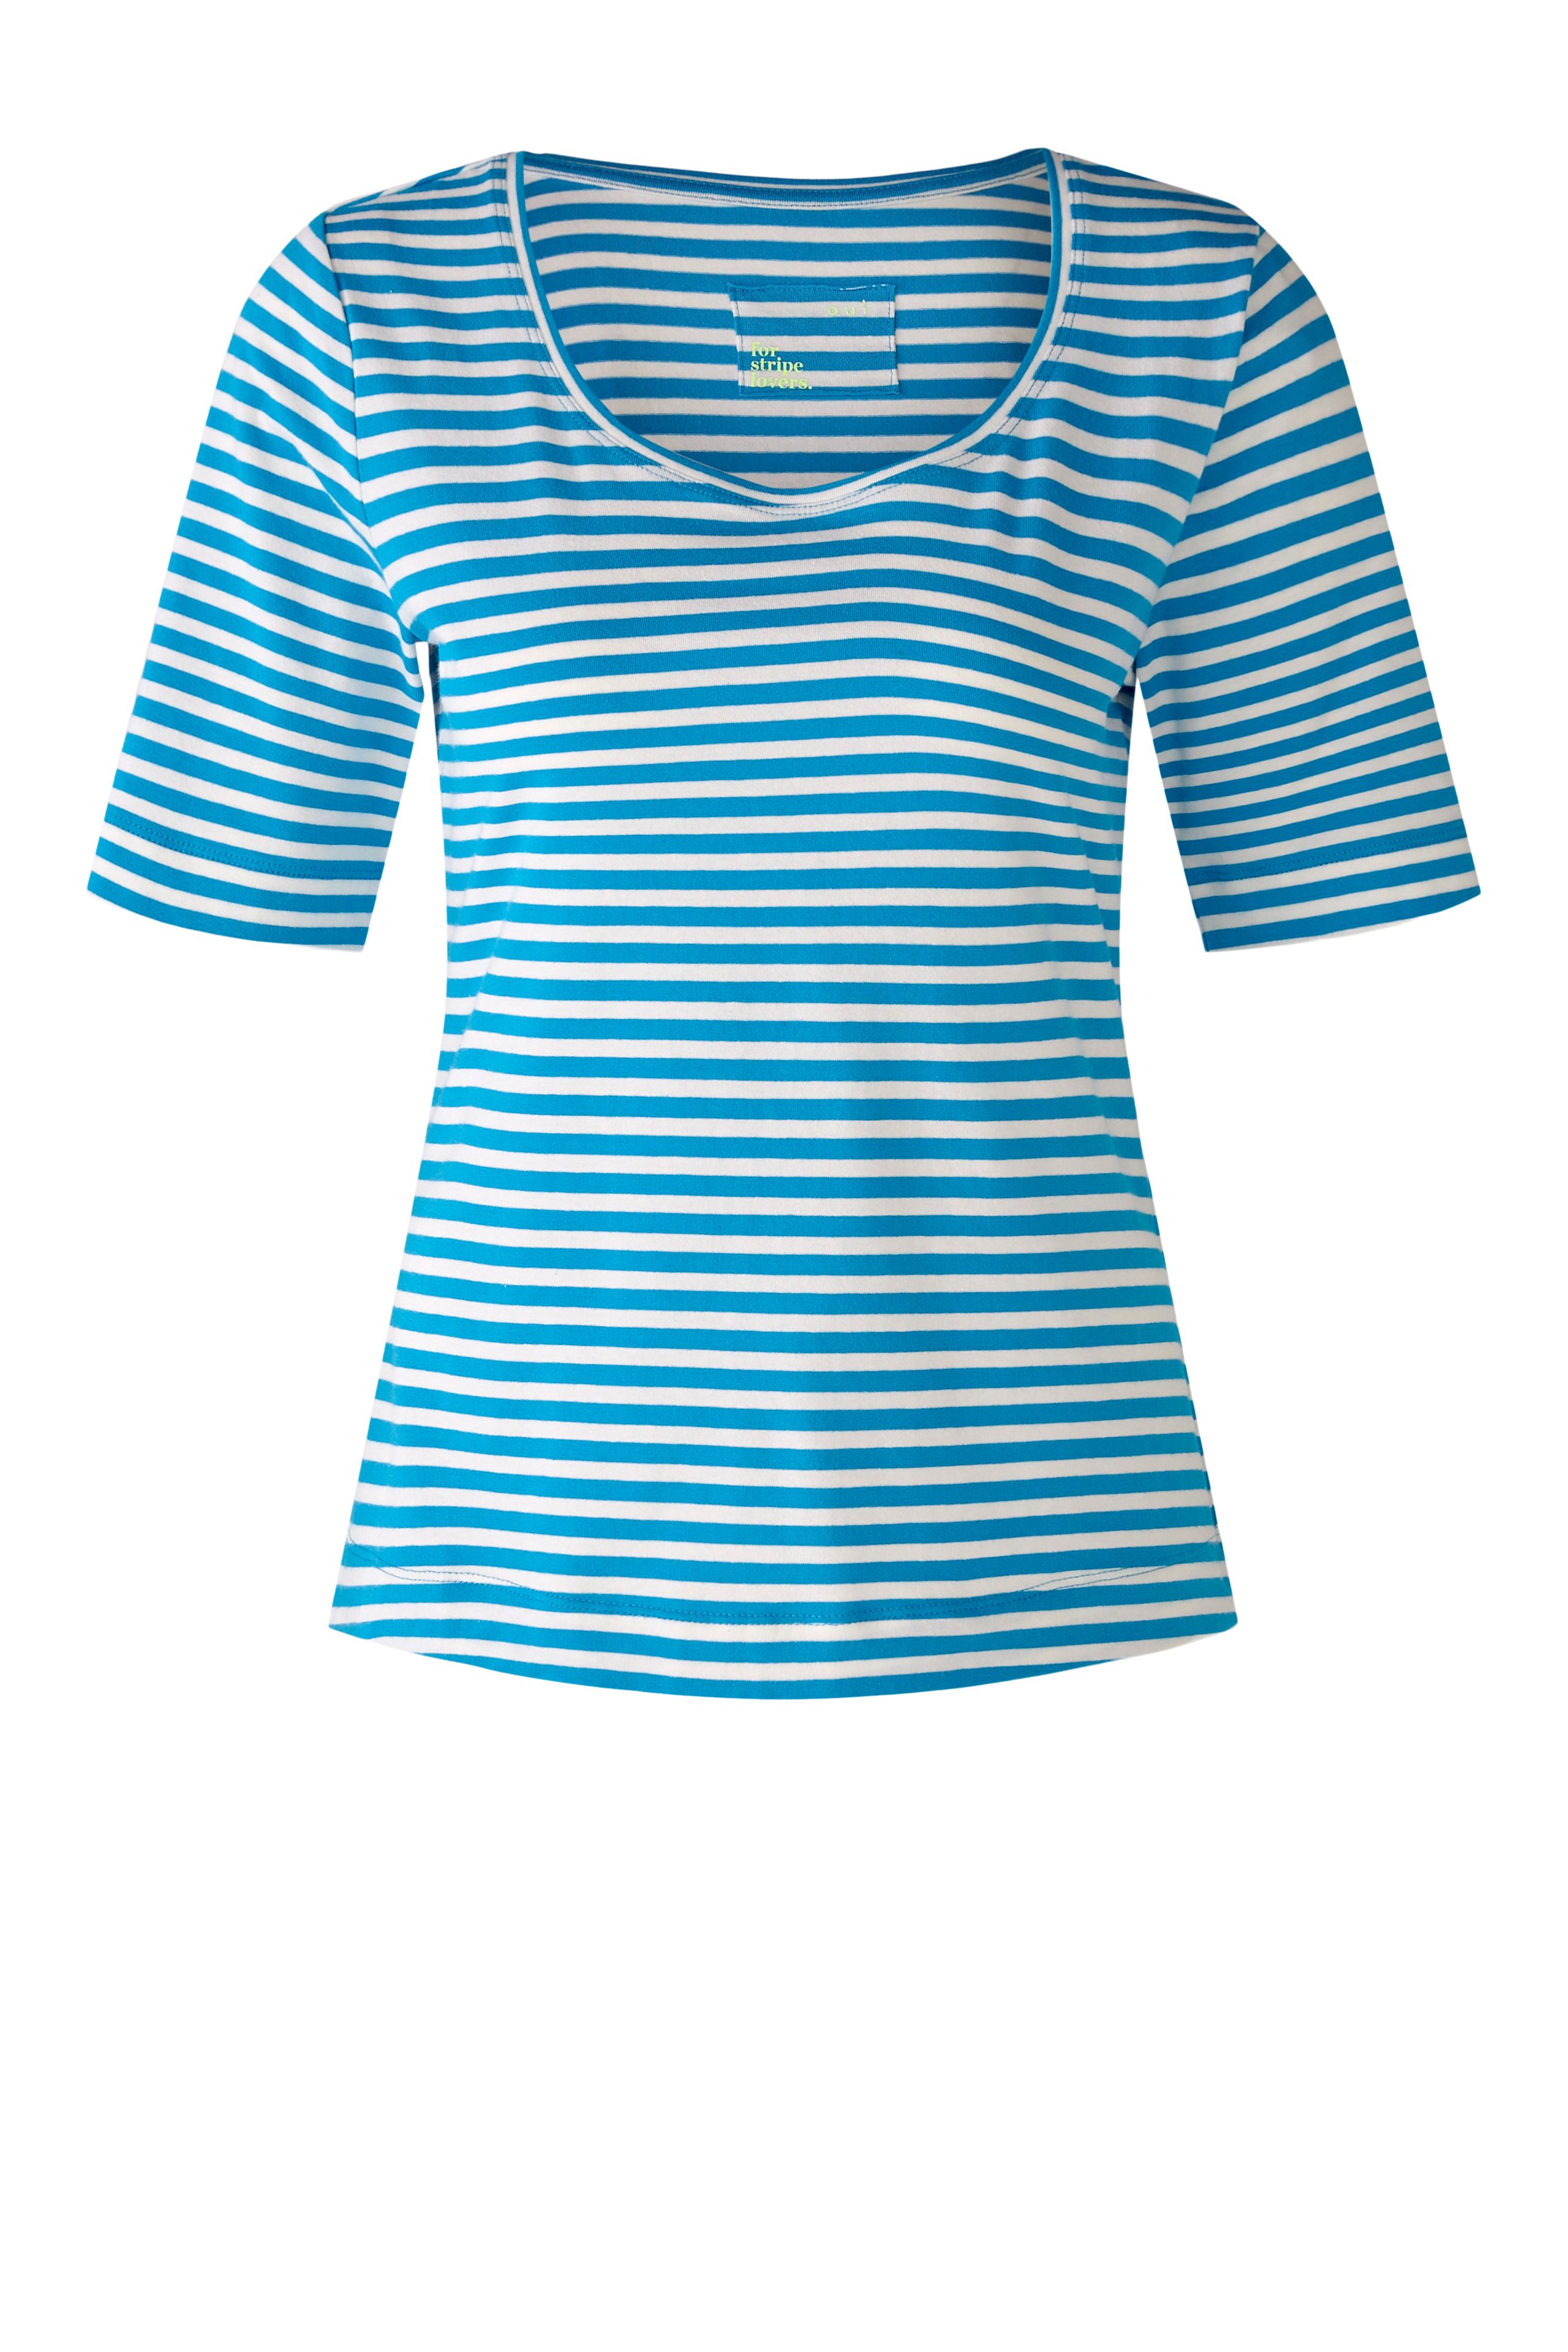 Oui T-Shirt 1/2 Arm  fine Stripe 36 light blue